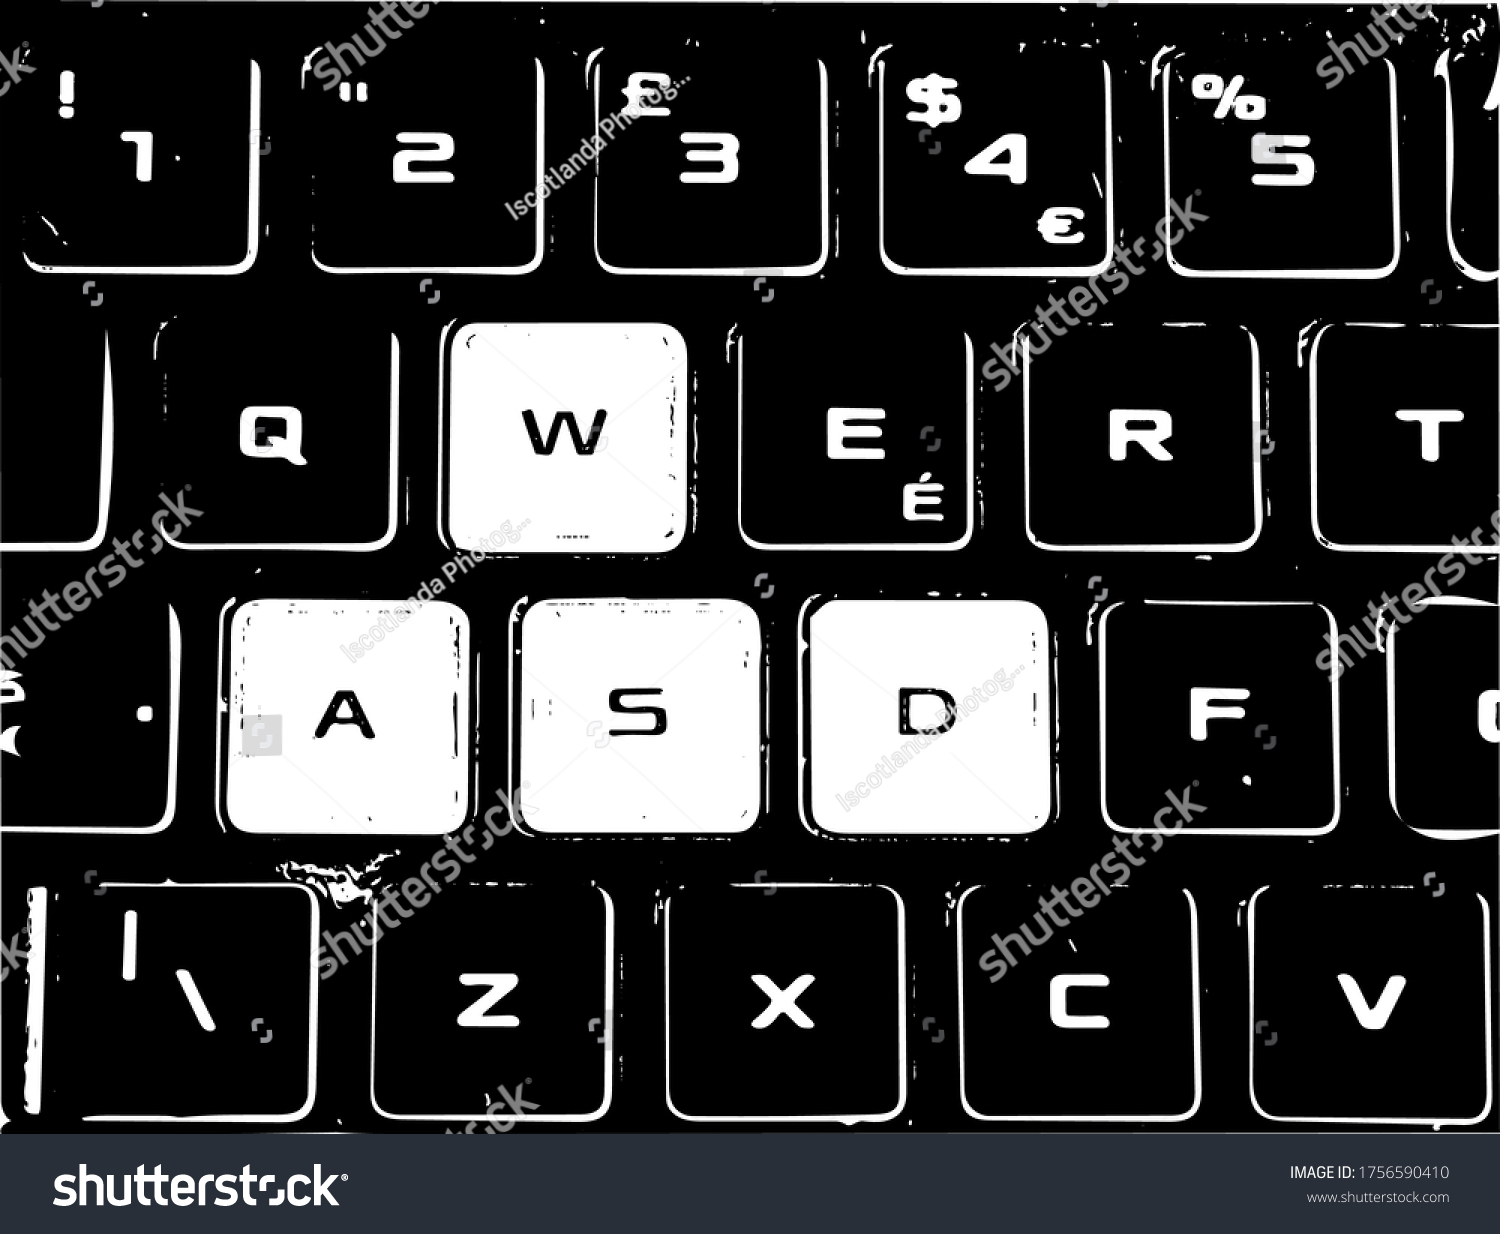 keyboard keys vector wasd key highlighted stock vector royalty free 1756590410